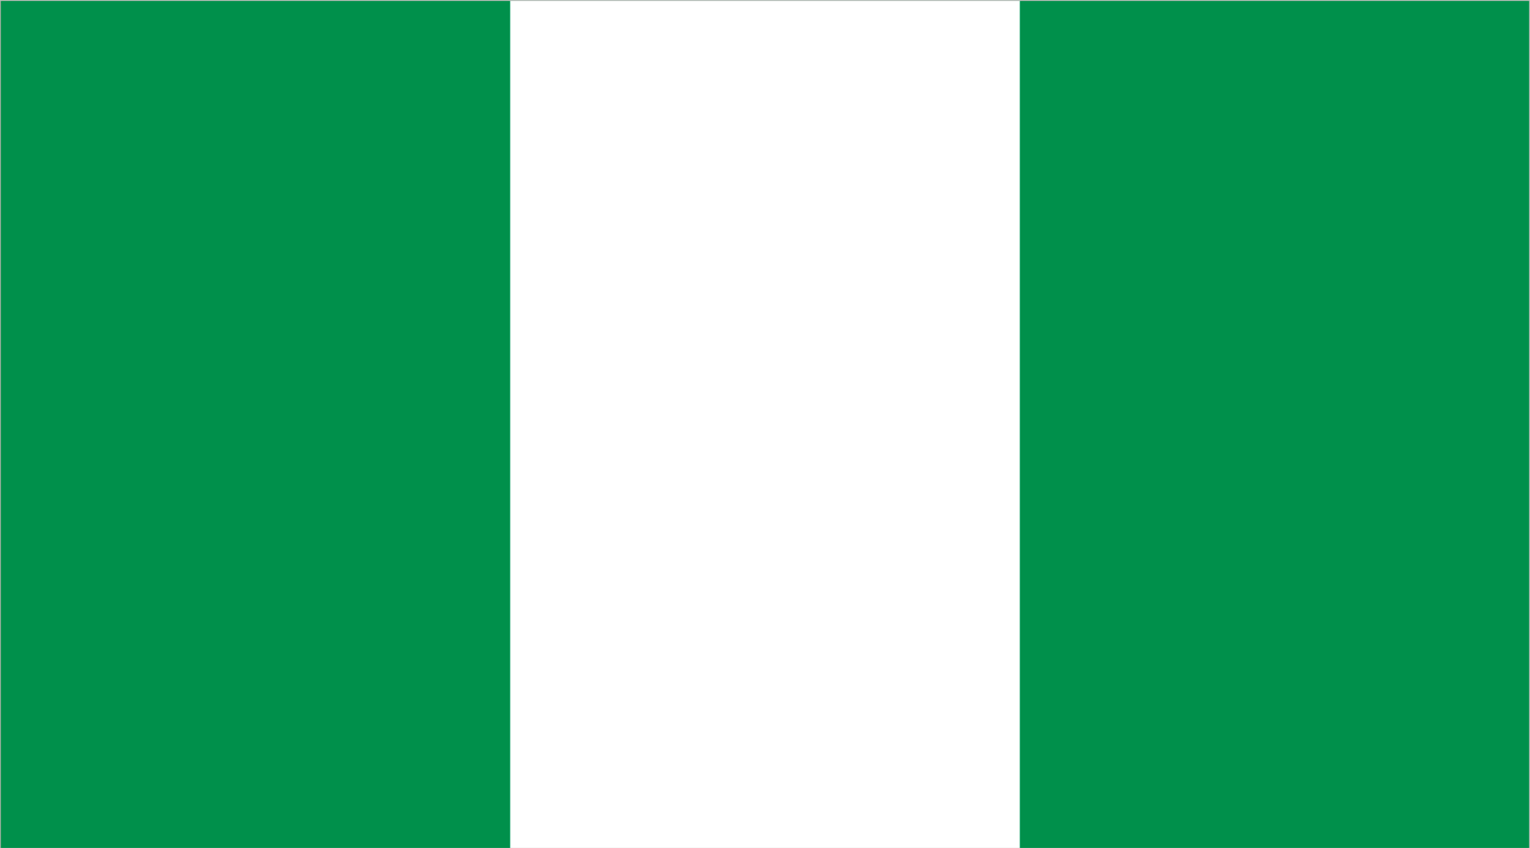 Nigeria National Flag | Made in UK | Flagmakers